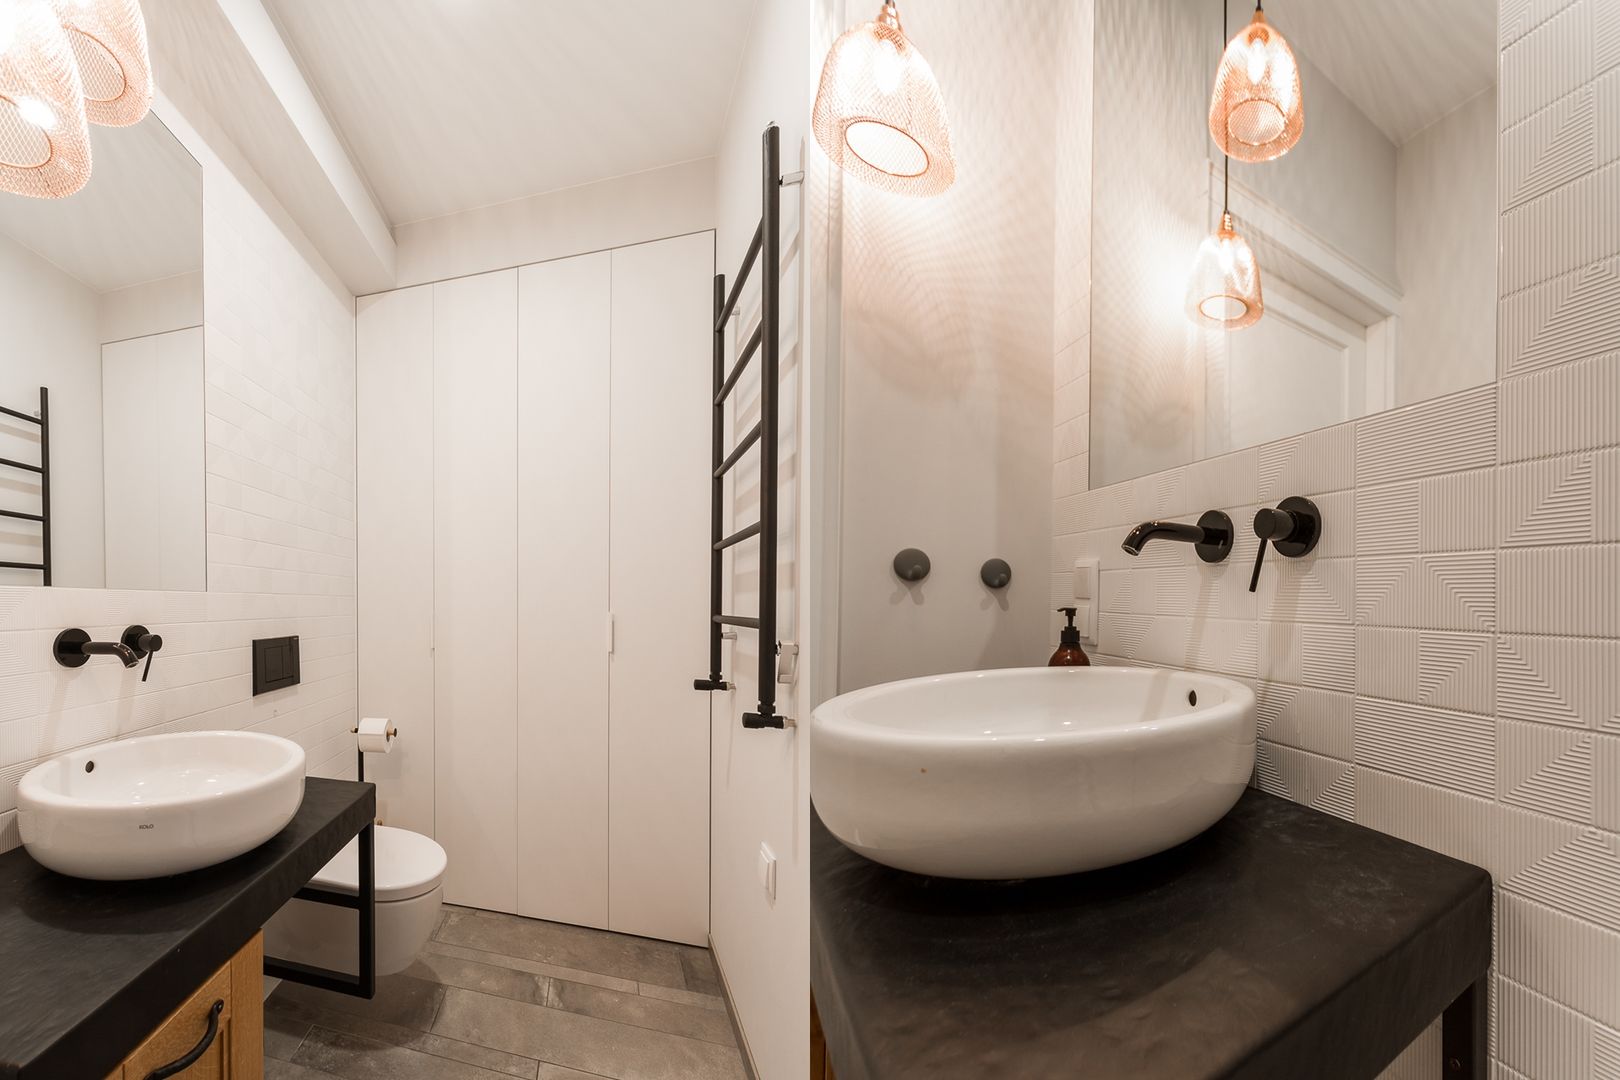 Dom dla rodziny w Suchym Lesie, HouseStudio HouseStudio Ванная комната в скандинавском стиле